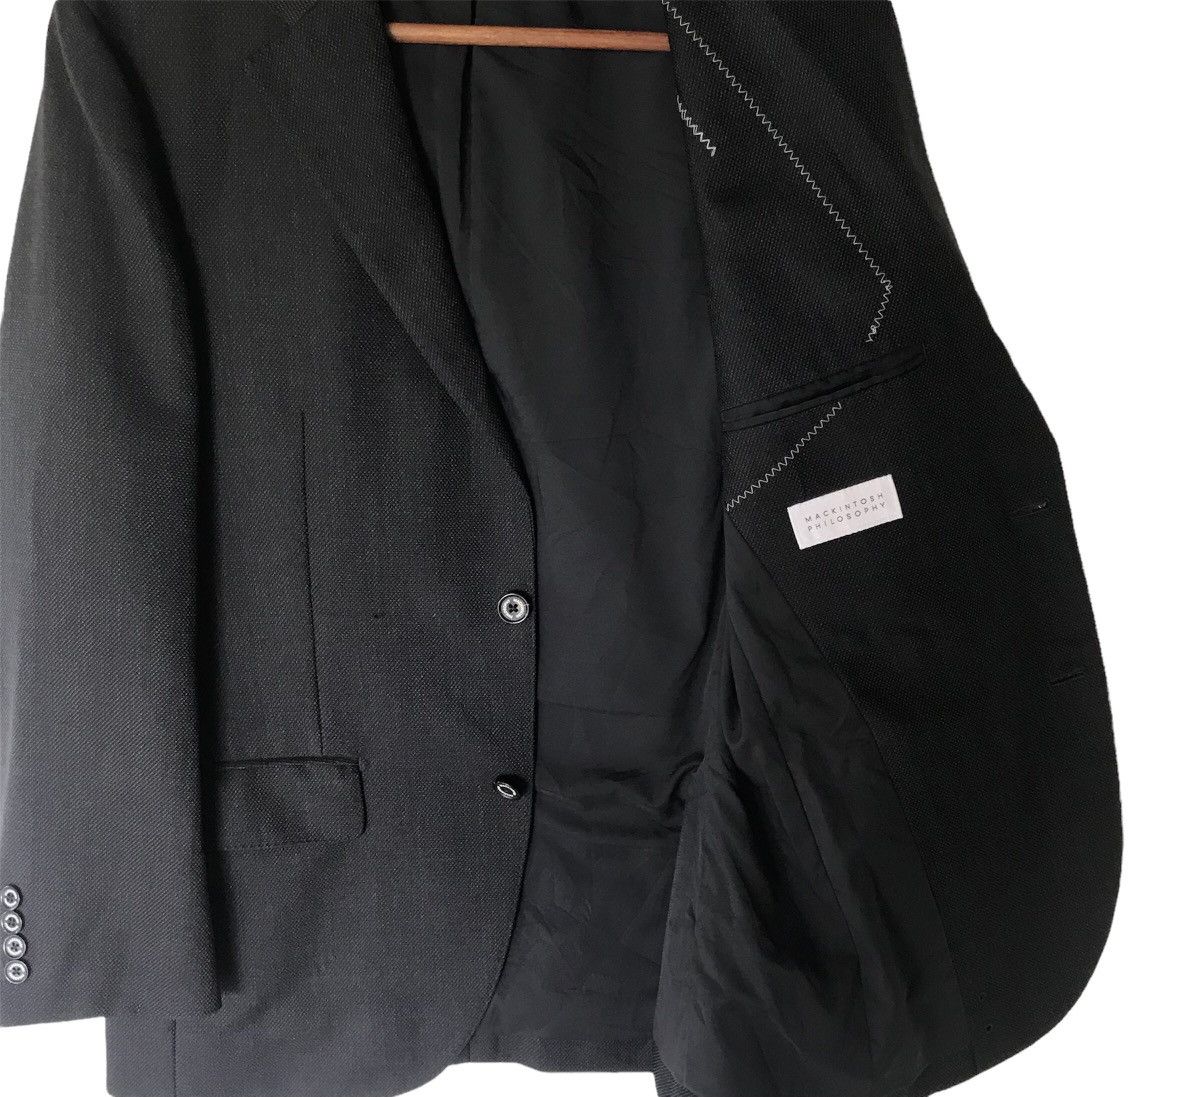 Mackintosh Philosophy Suit/Blazer - 3